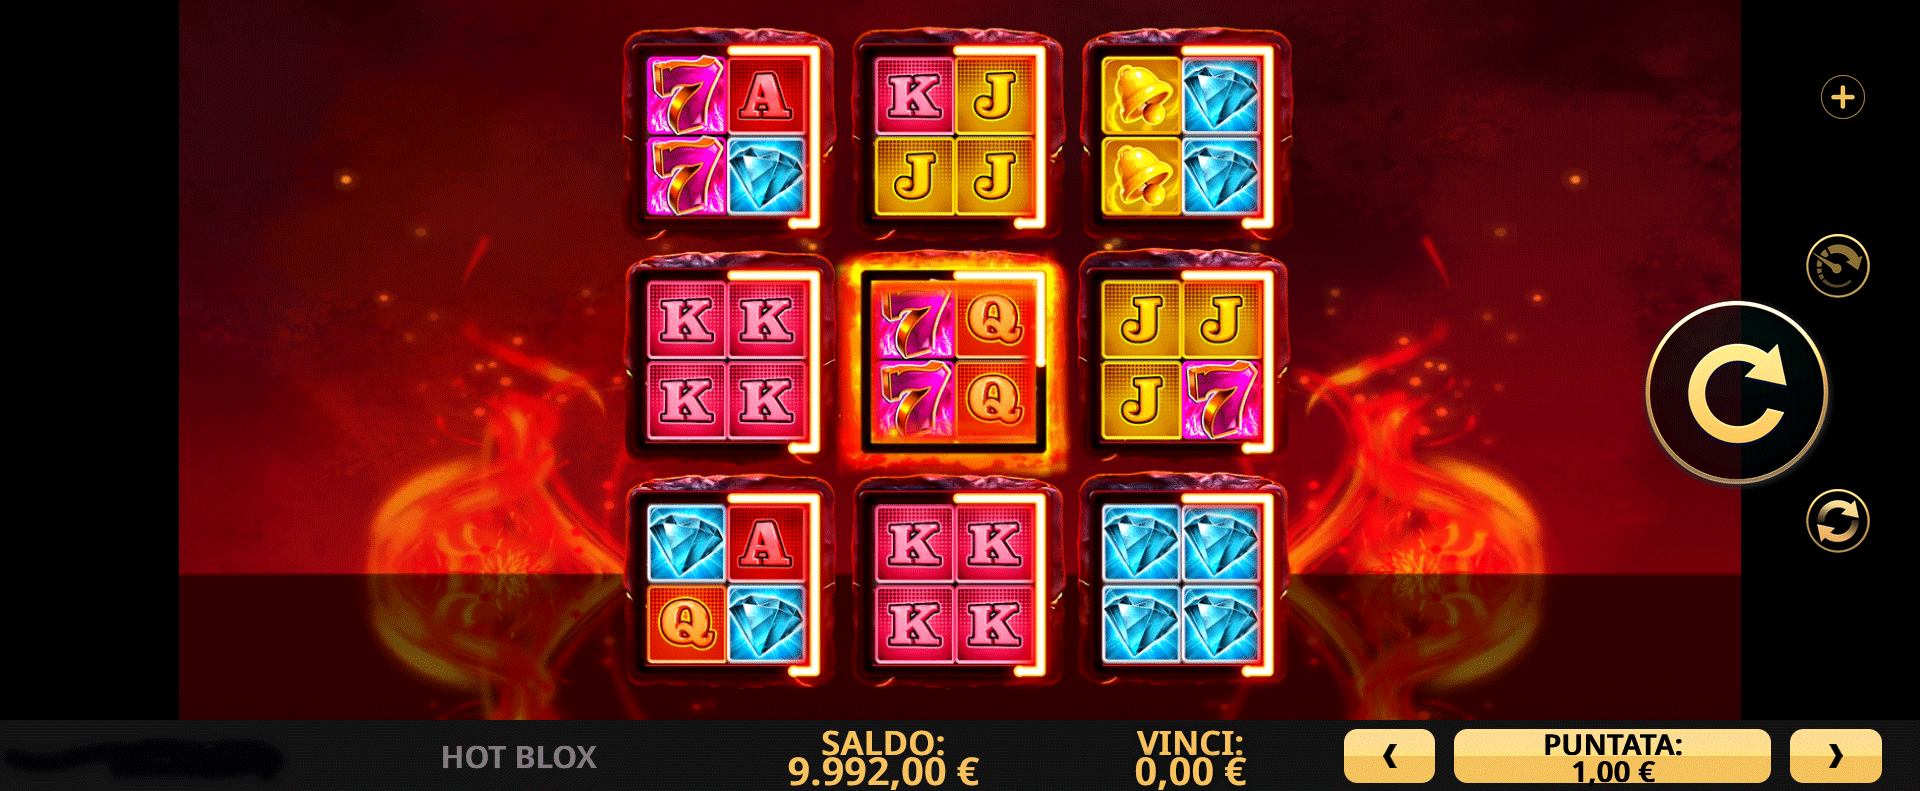 schermata della slot machine hot blox